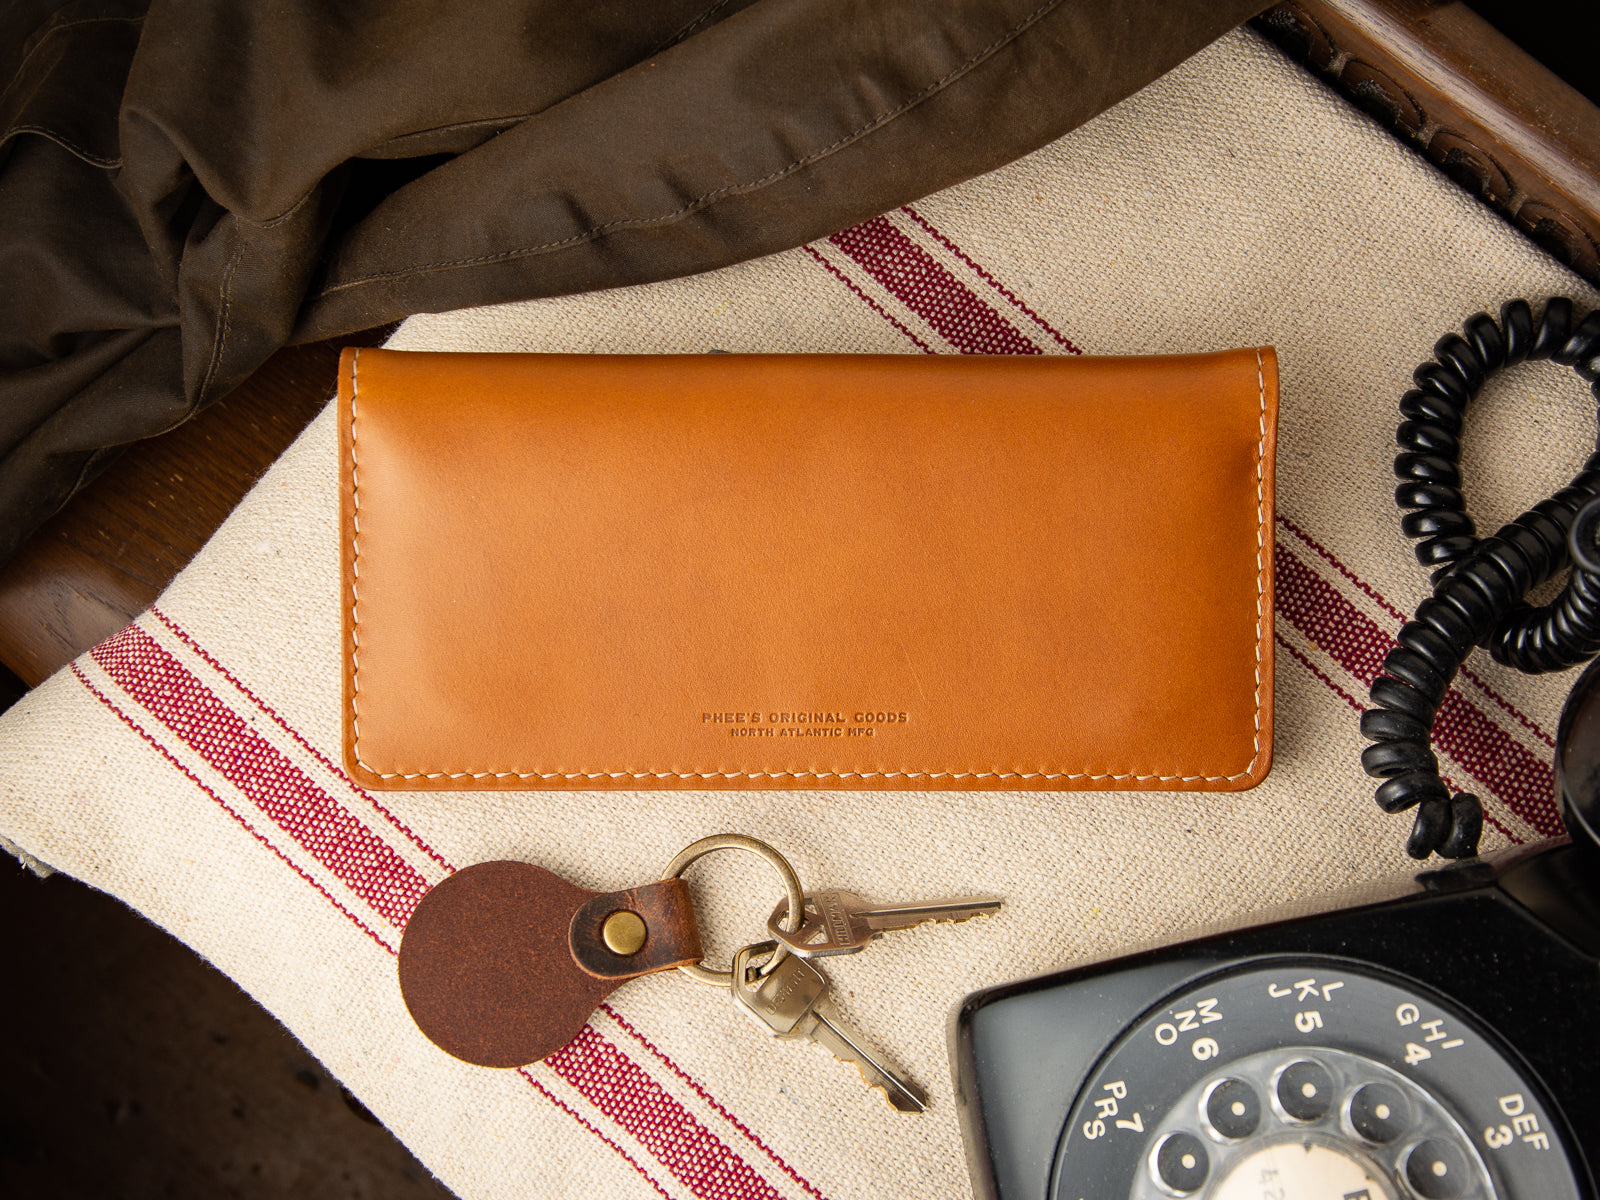 Clutch wallet in tan full grain leather sitting on phone table in foyer.